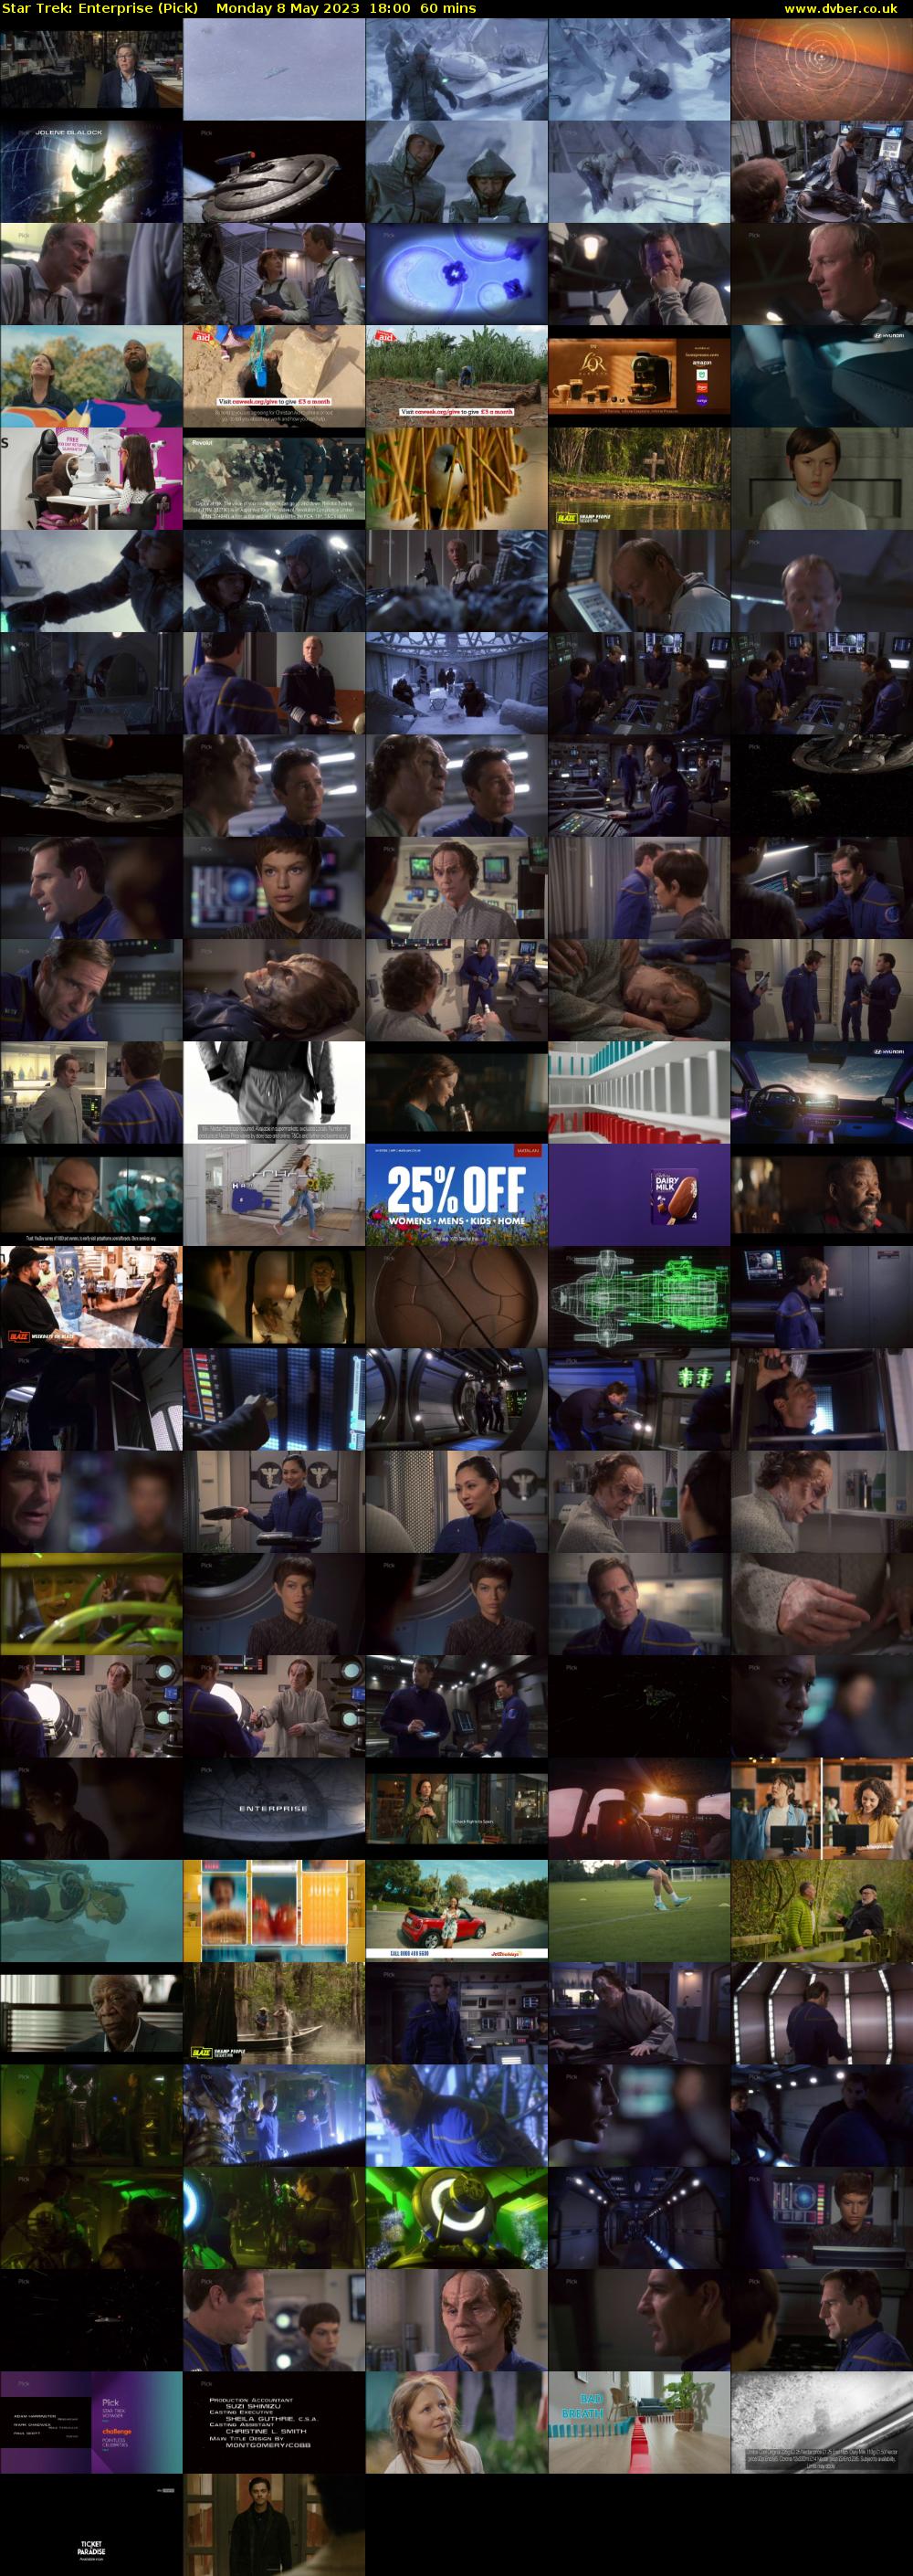 Star Trek: Enterprise (Pick) Monday 8 May 2023 18:00 - 19:00